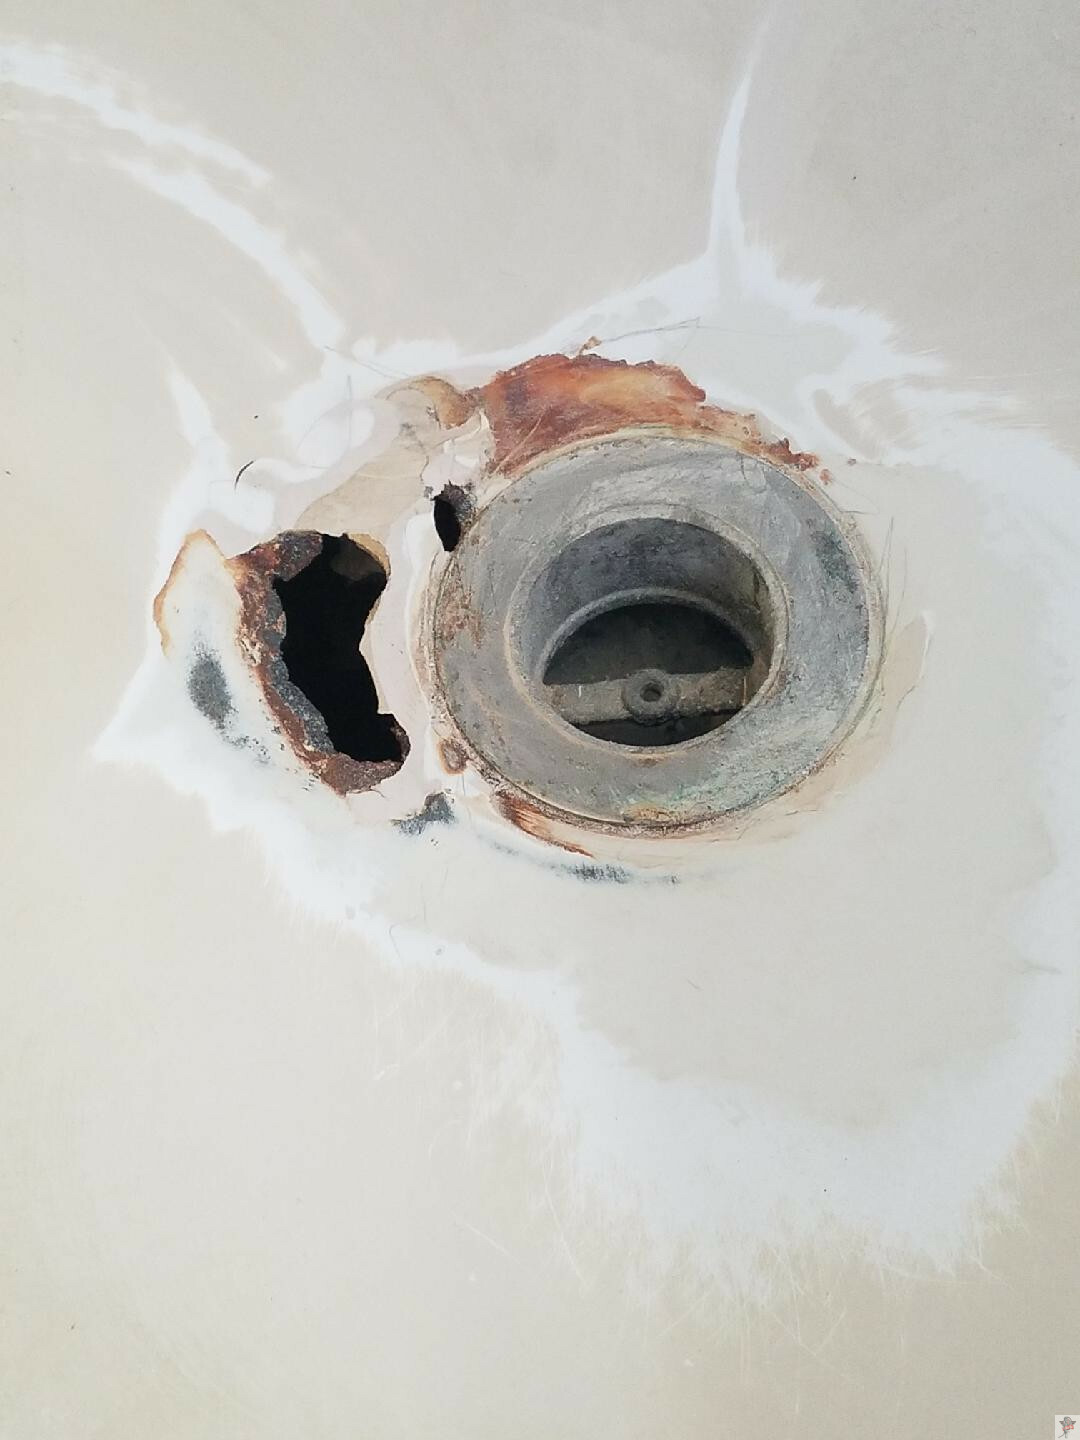 Tub Refinishing Repair Rust More, How To Fix A Rusted Bathtub Drain